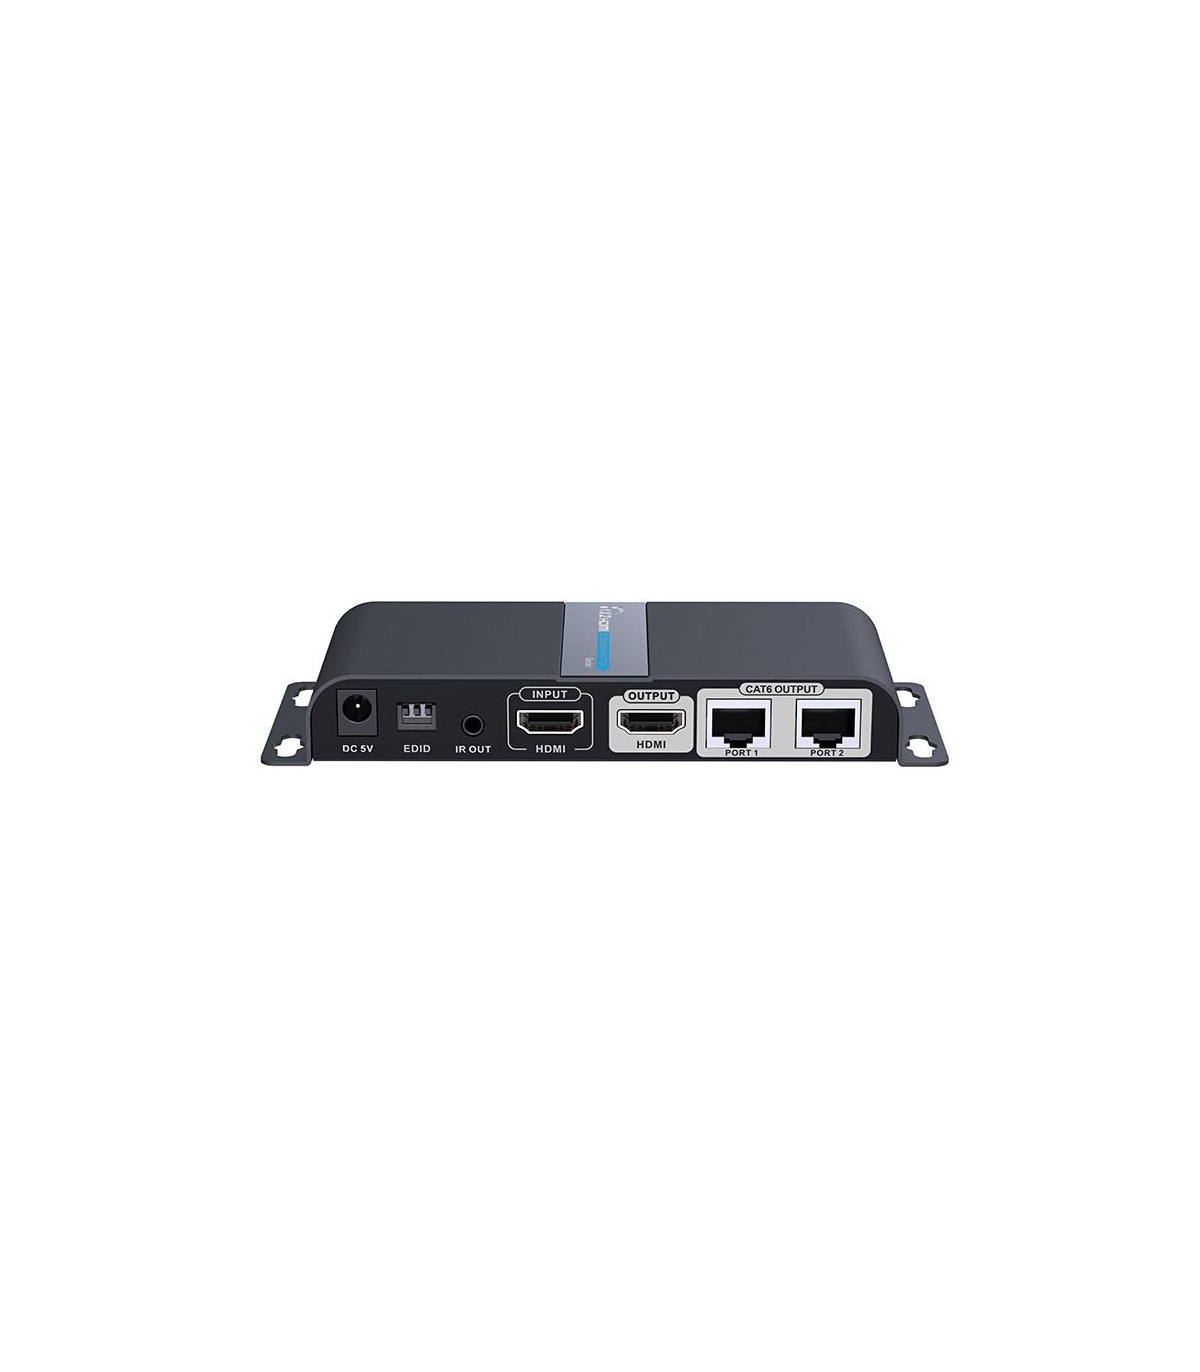 اسپلیتر HDMI لنکنگ Lenkeng LKV712Pro 